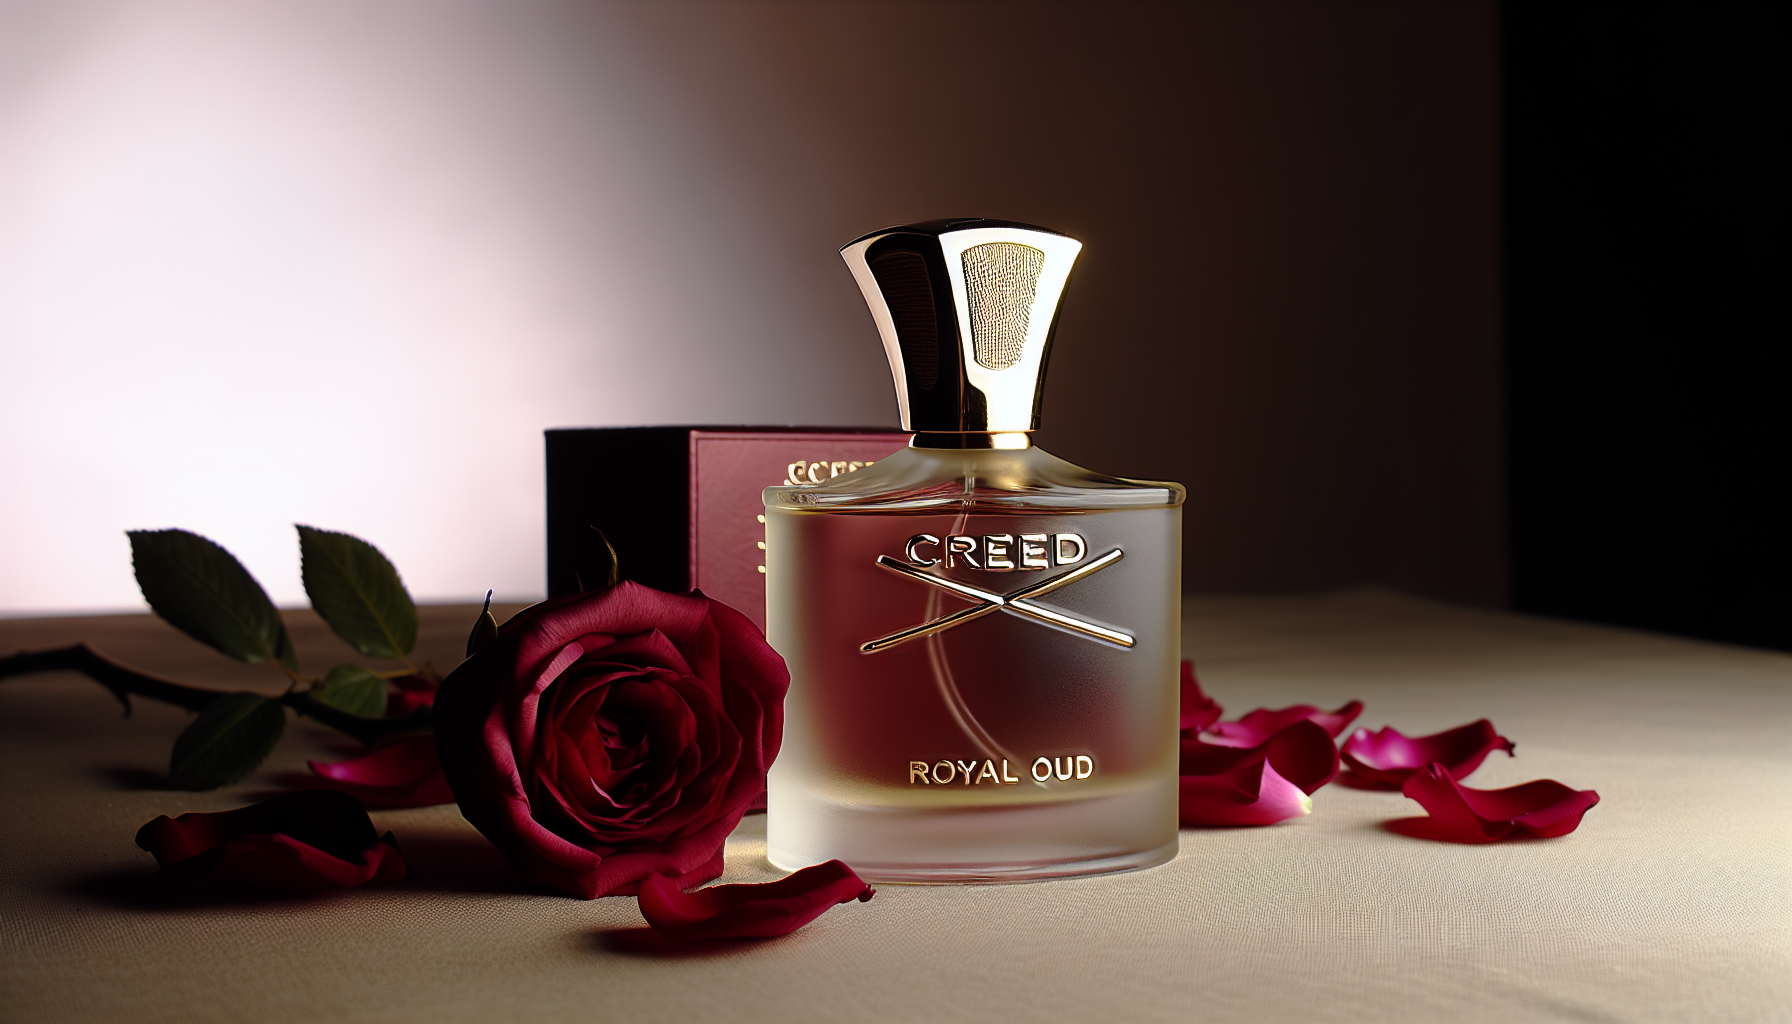 A luxurious bottle of Creed Royal Oud Eau de Parfum resting on a bed of rose petals